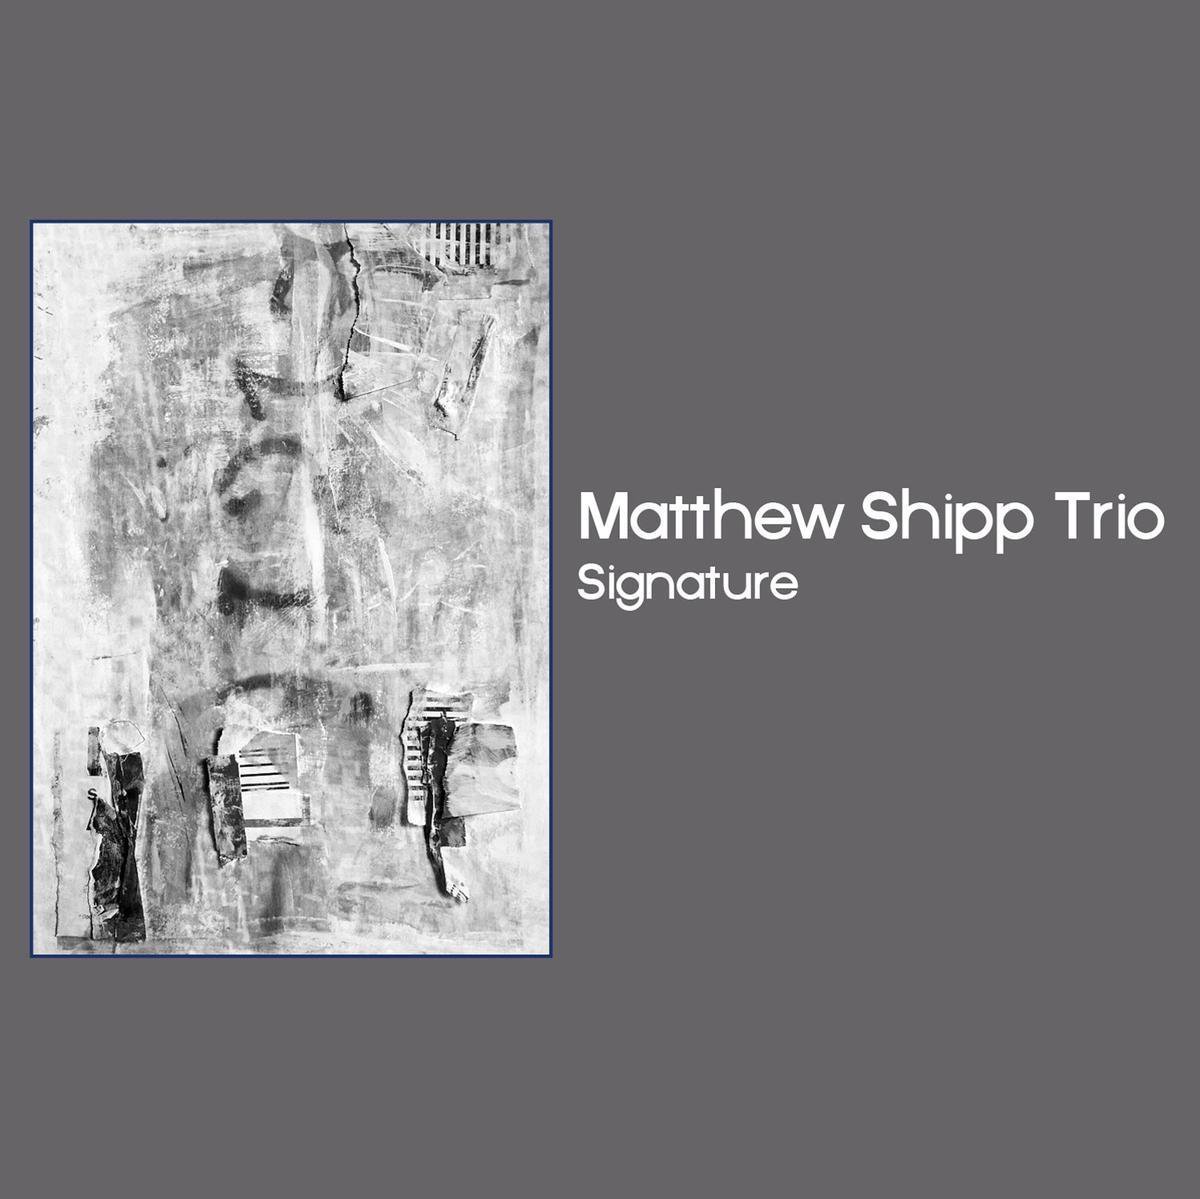 Signature - Matthew Shipp Trio